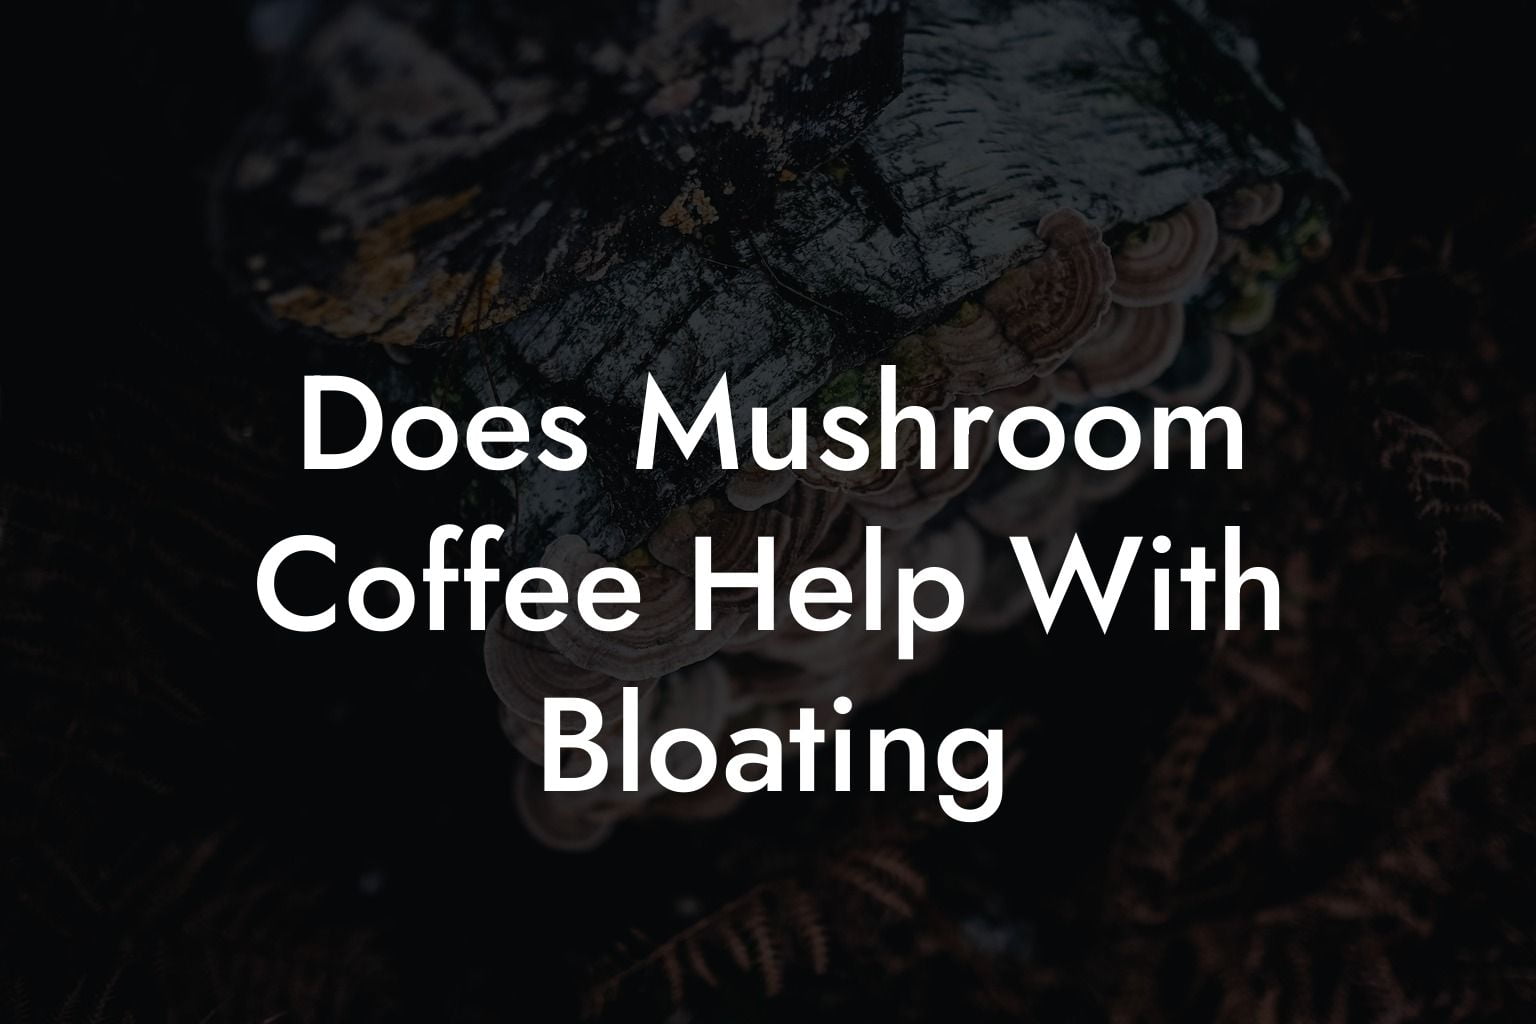 Does Mushroom Coffee Help With Bloating